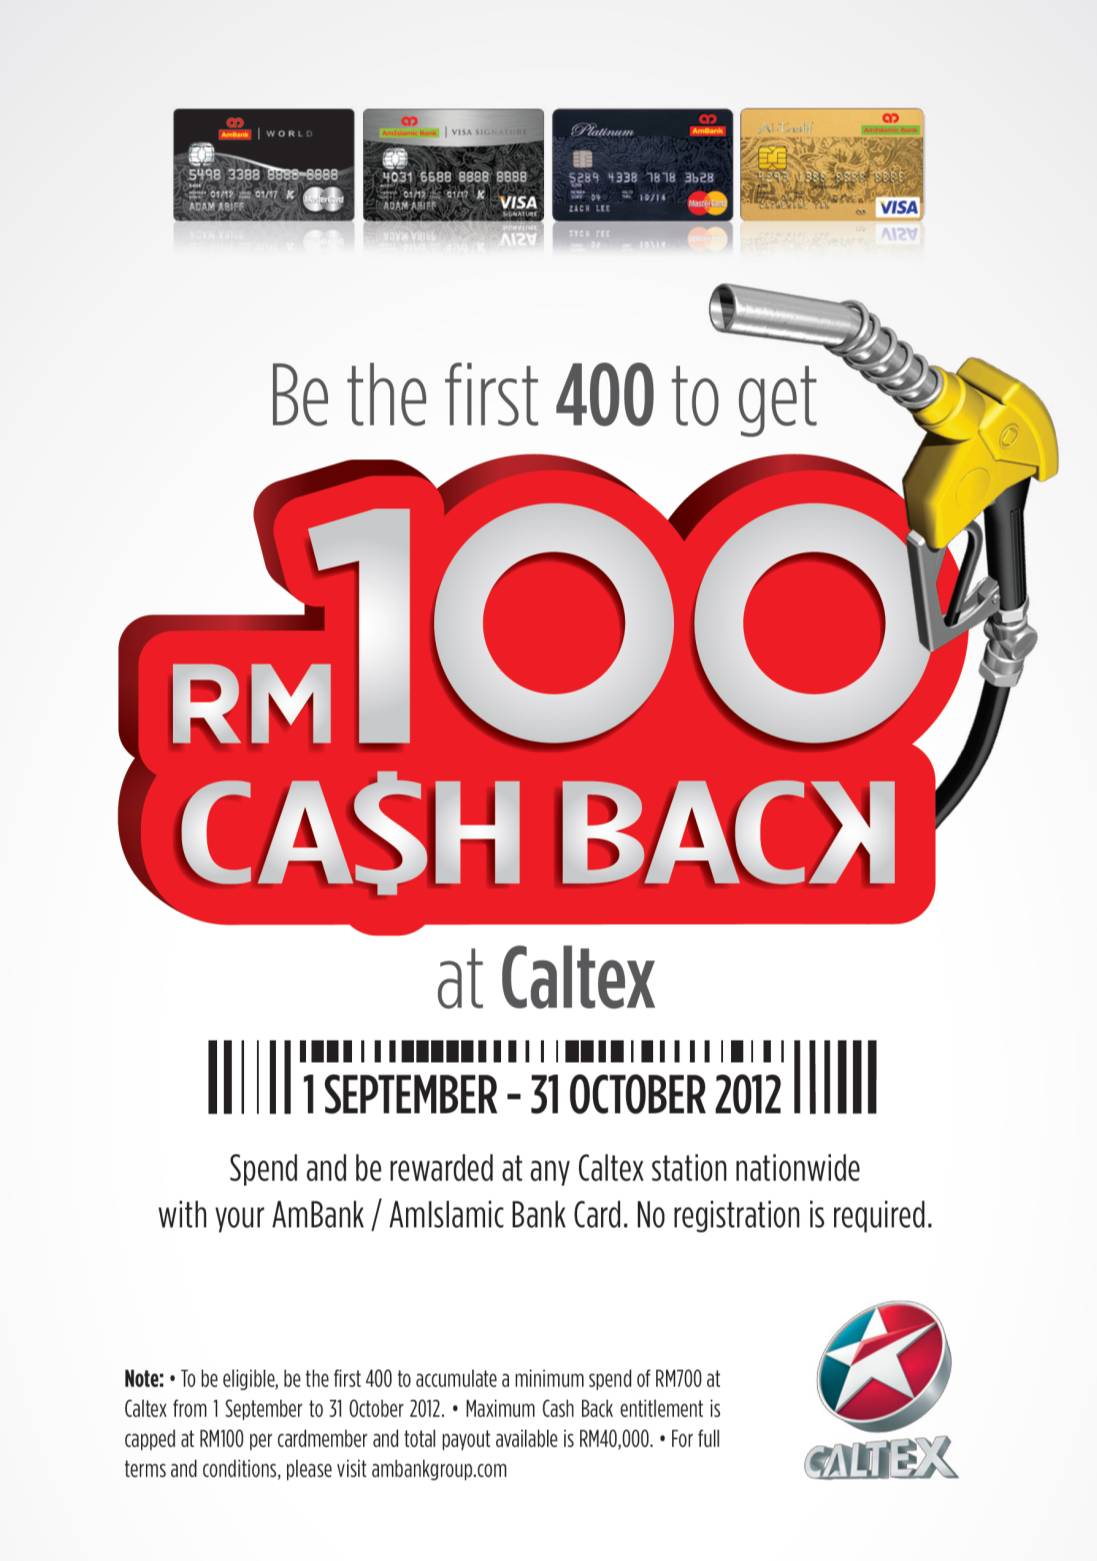 new-credit-card-promotion-get-cash-back-rm100-at-caltex-ambank